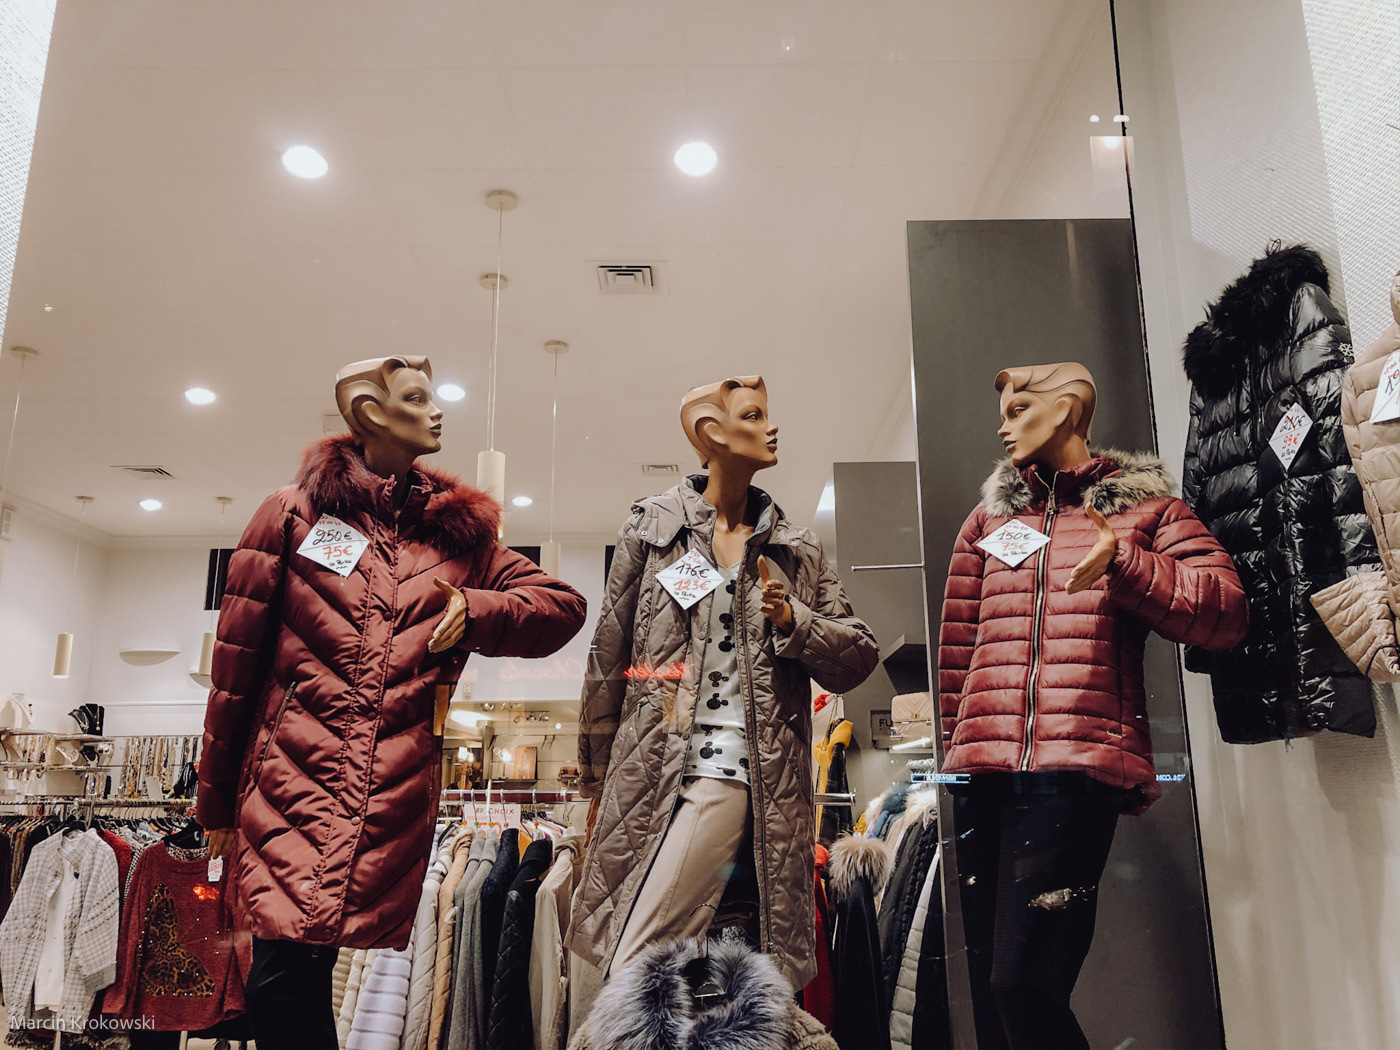 Shop window mannequins